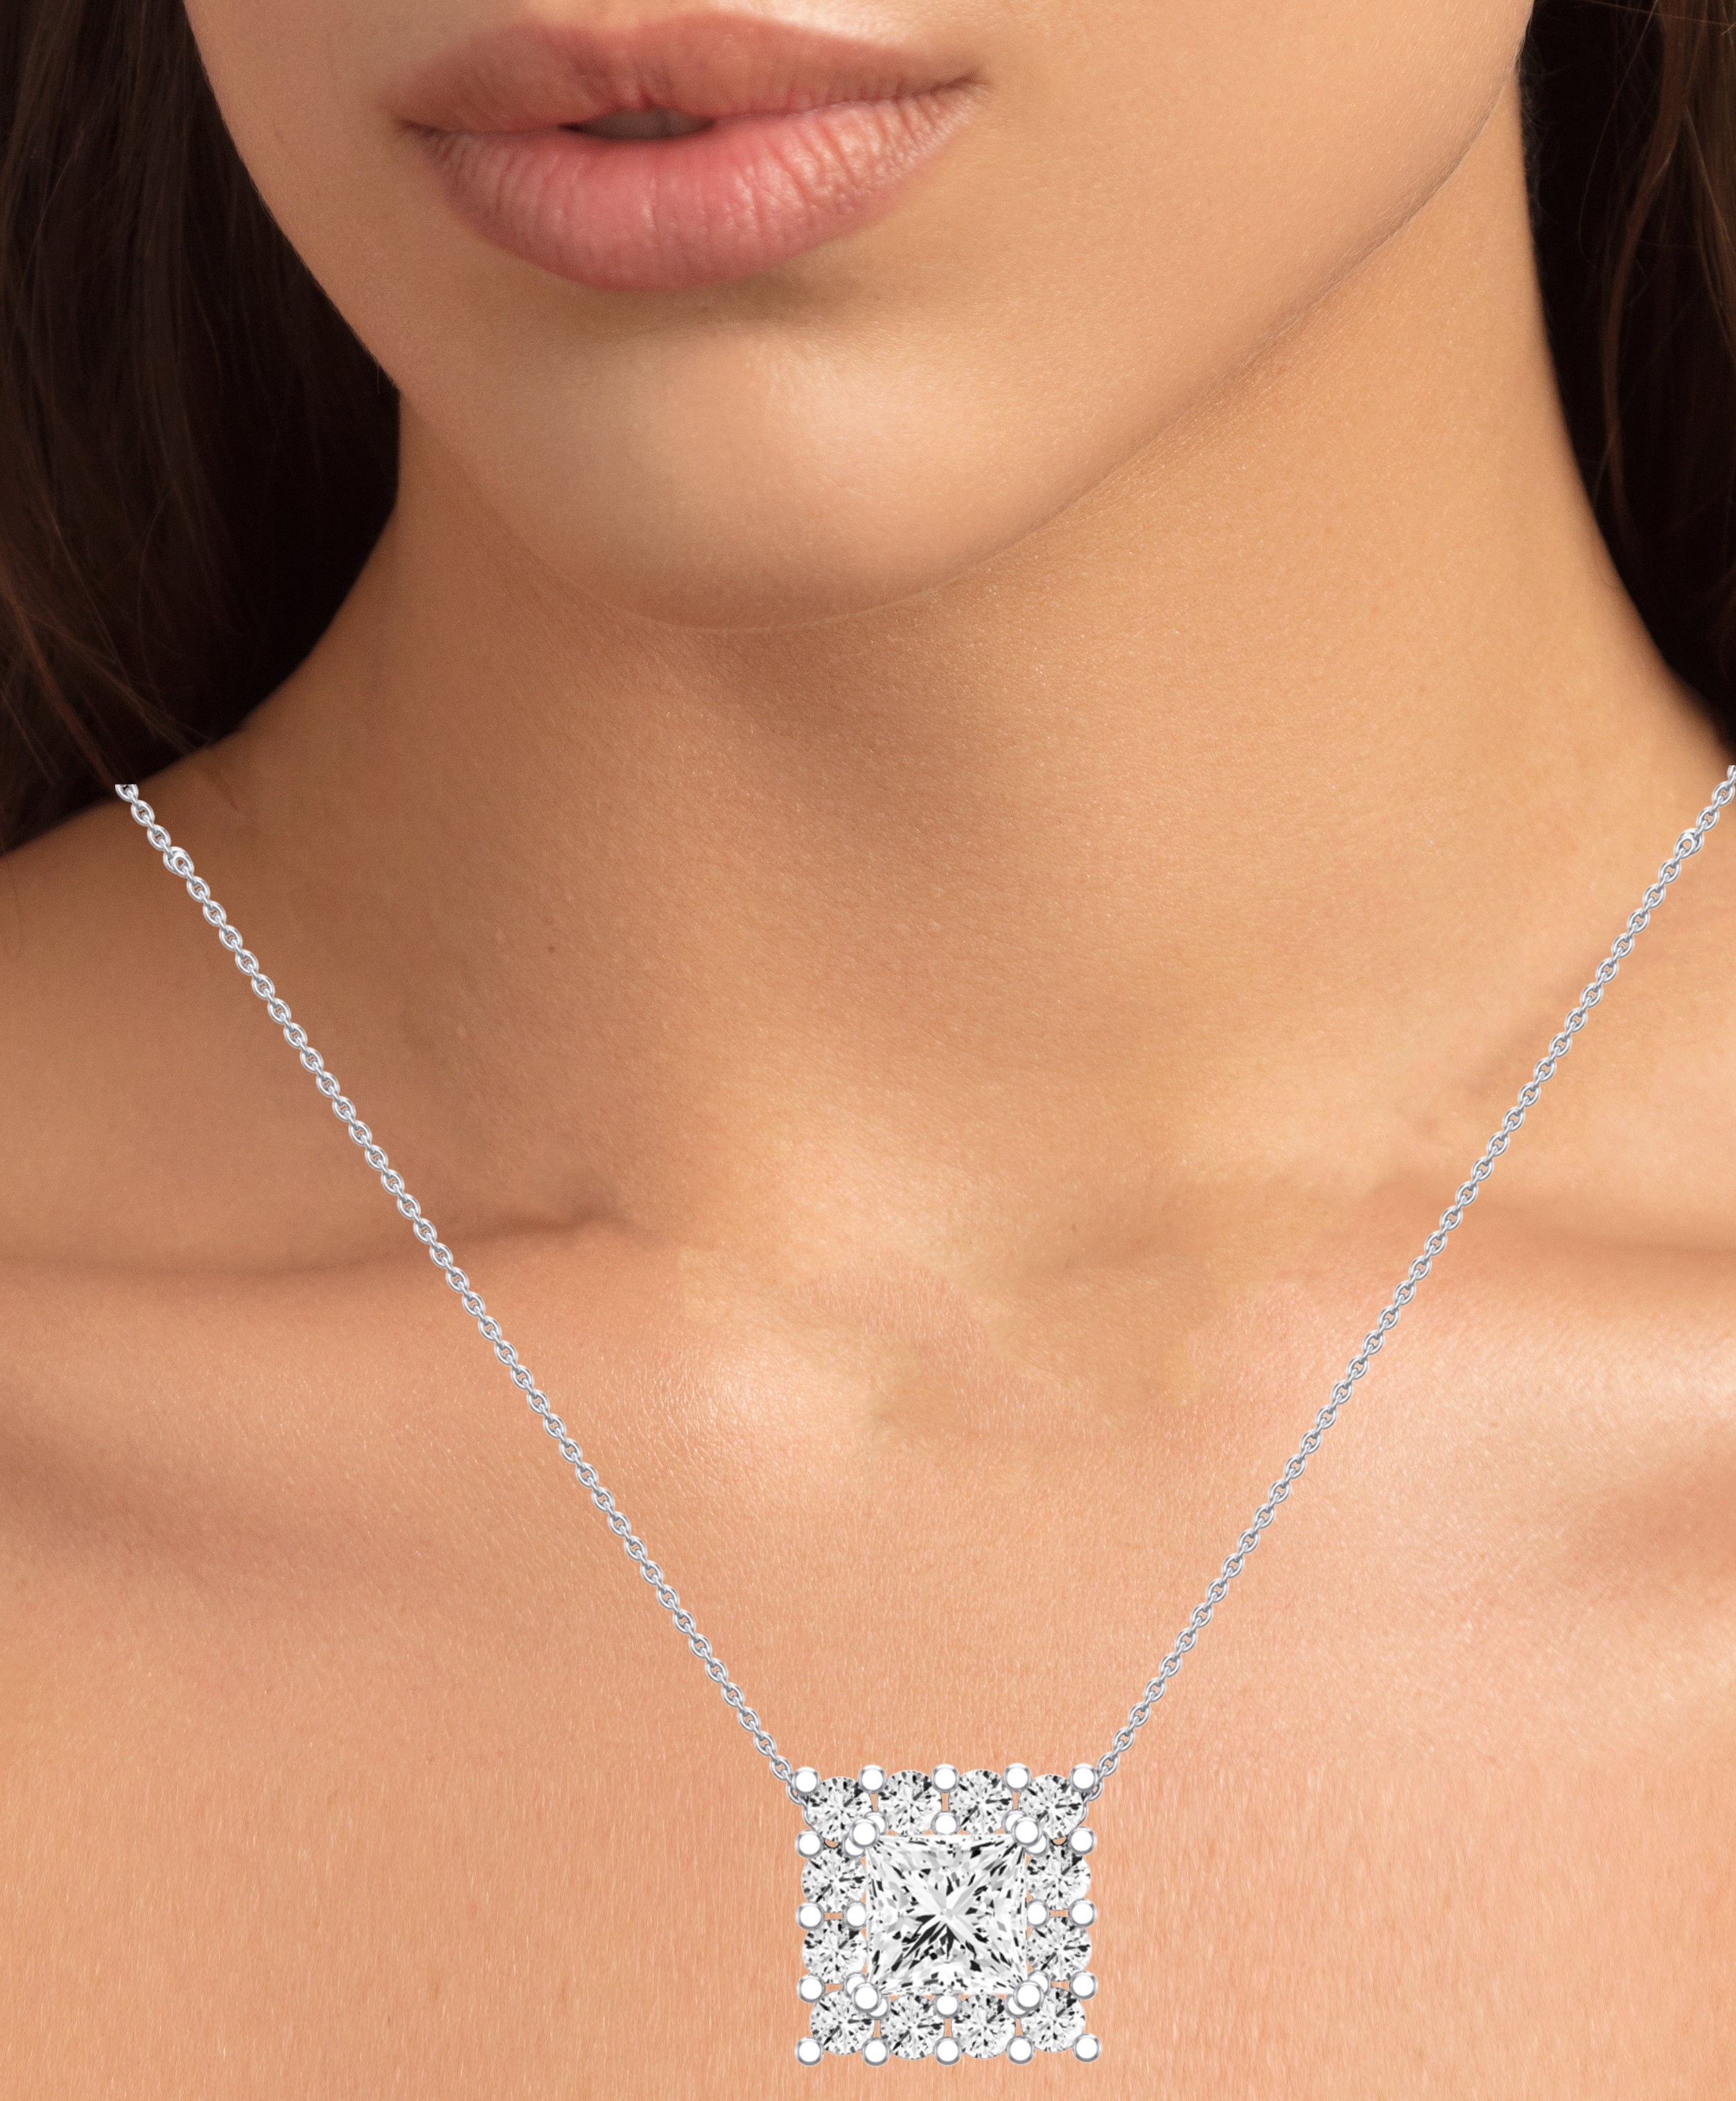 Cushion-Cut CVD Lab Grown Diamond Solitaire Pendant Necklace – ASSAY